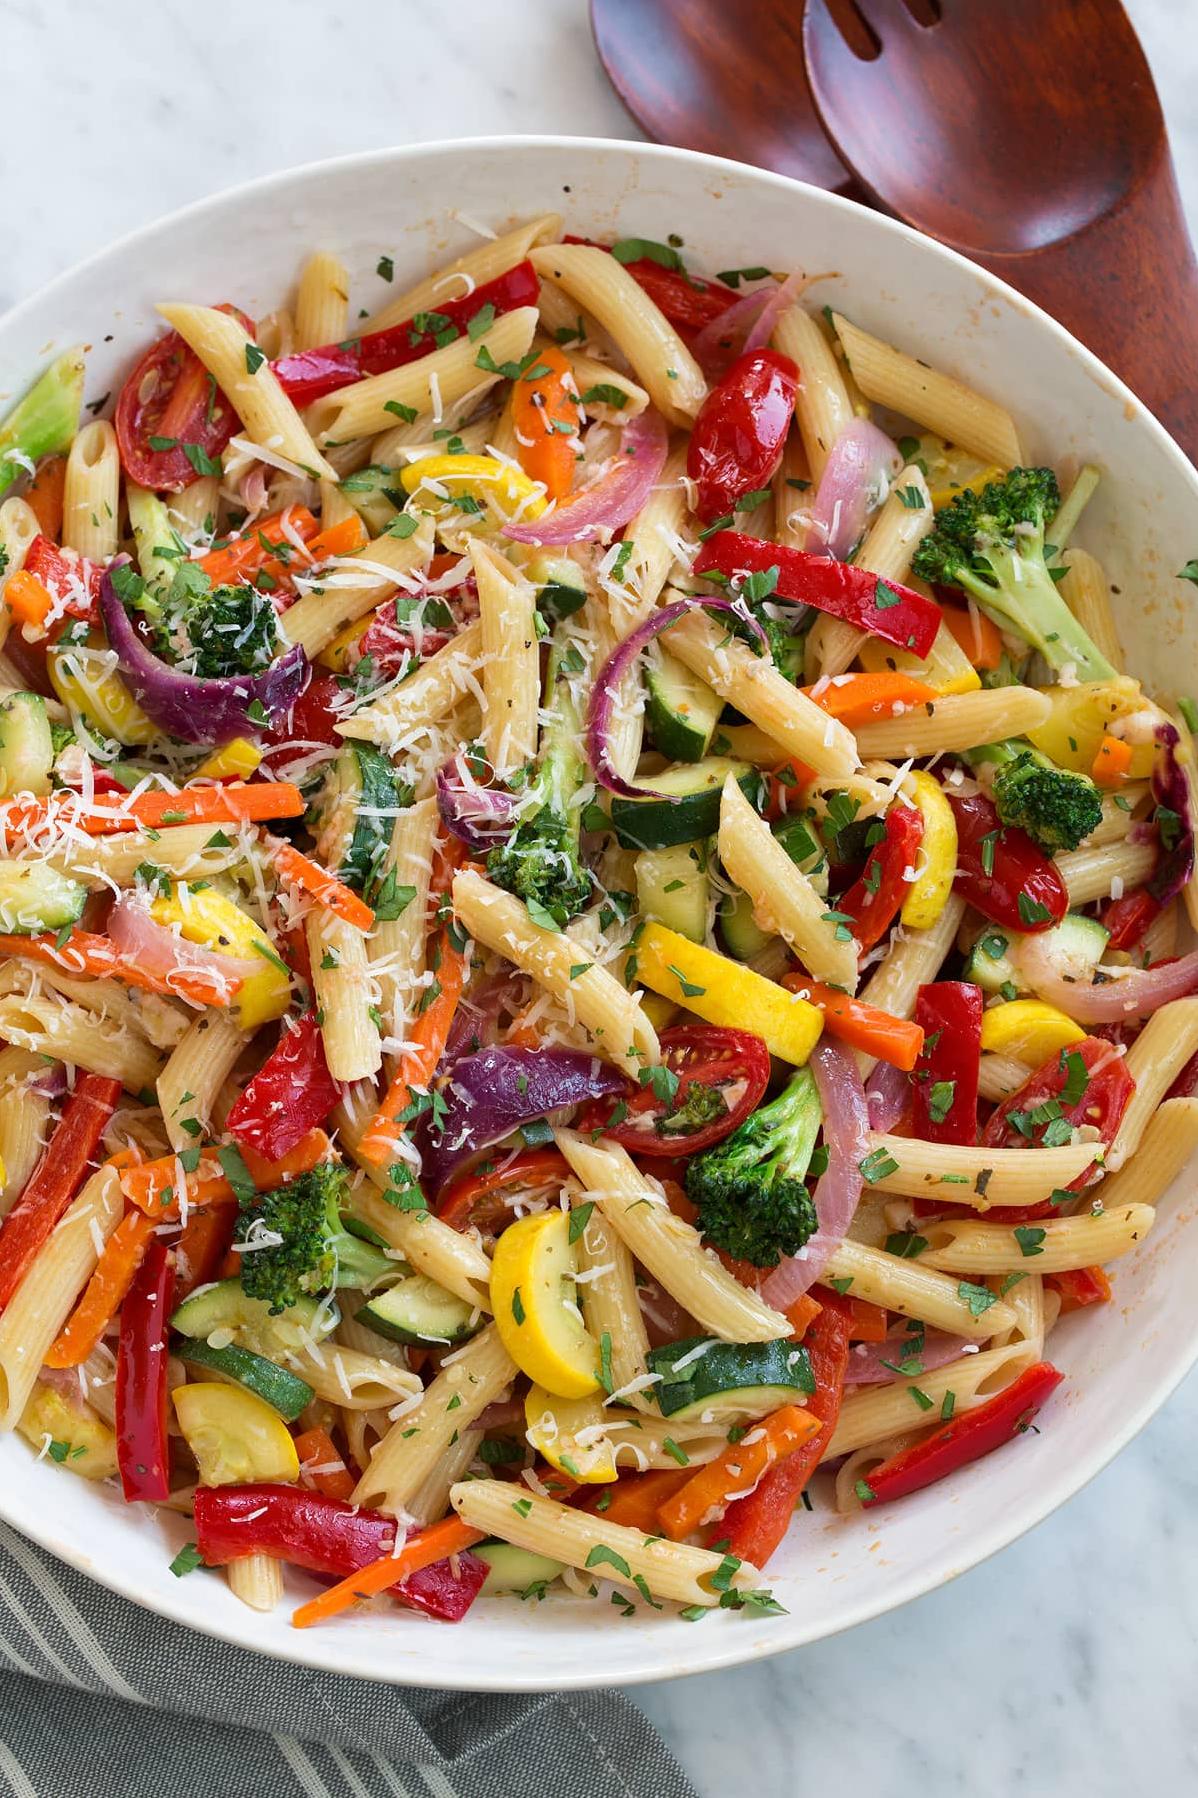  Step up your weeknight pasta game with this irresistible Vegan Pasta Primavera.